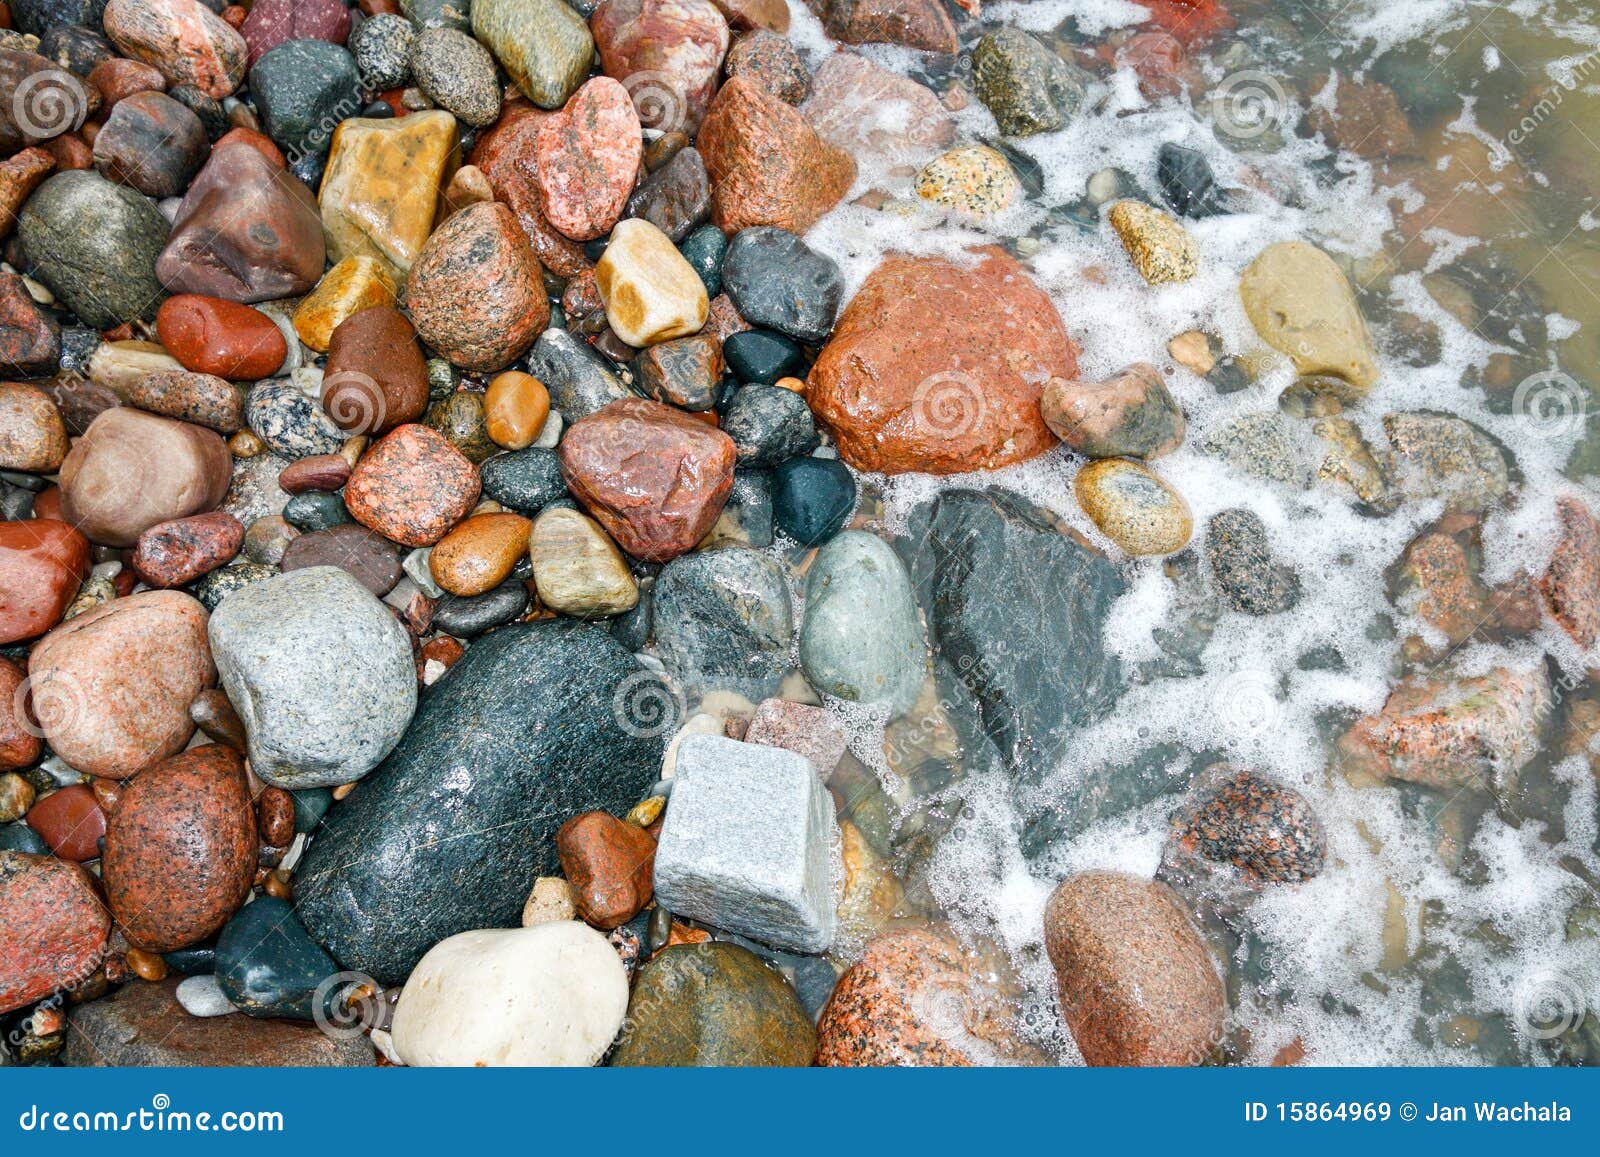 Sea stone stock image. Image of pile, rock, harmony, shore